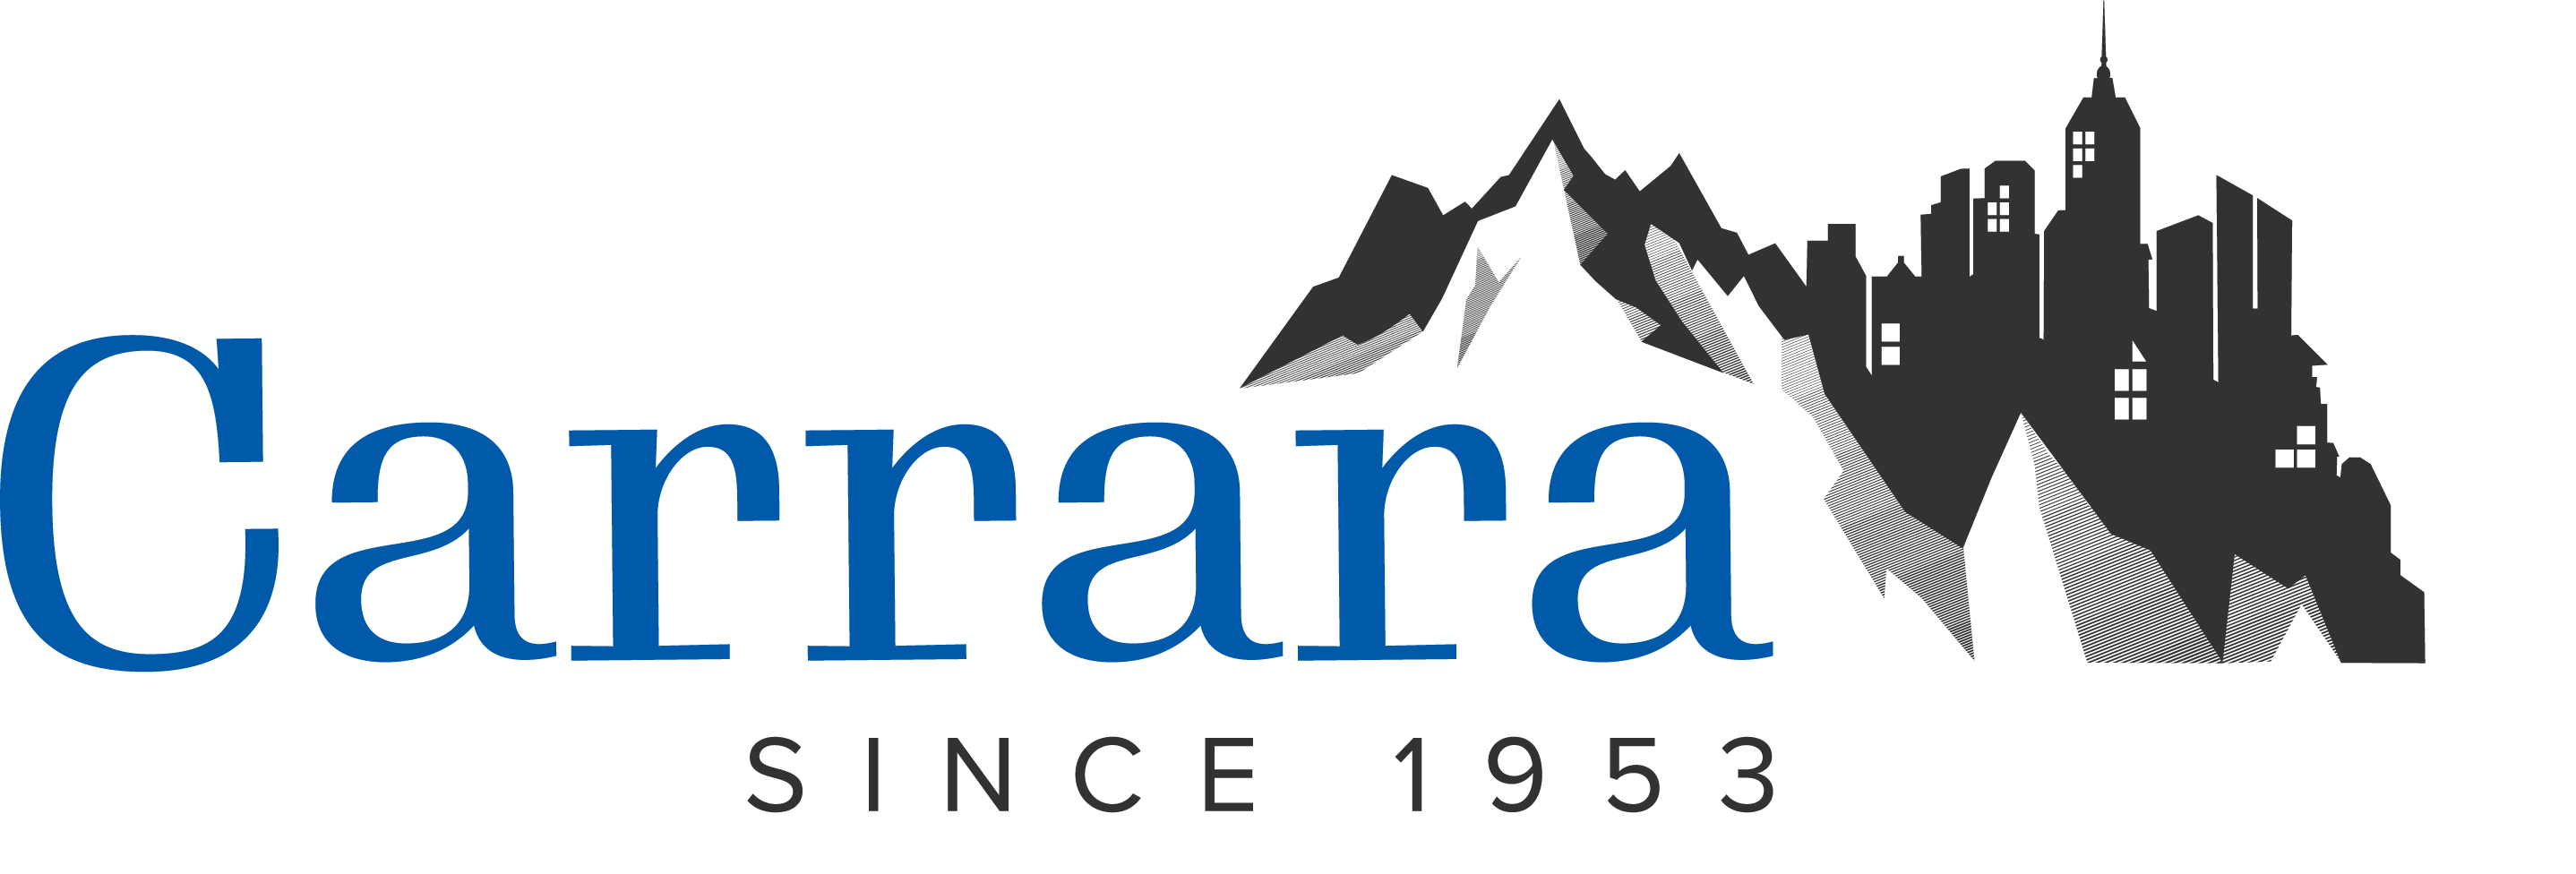 Carrara, Inc.